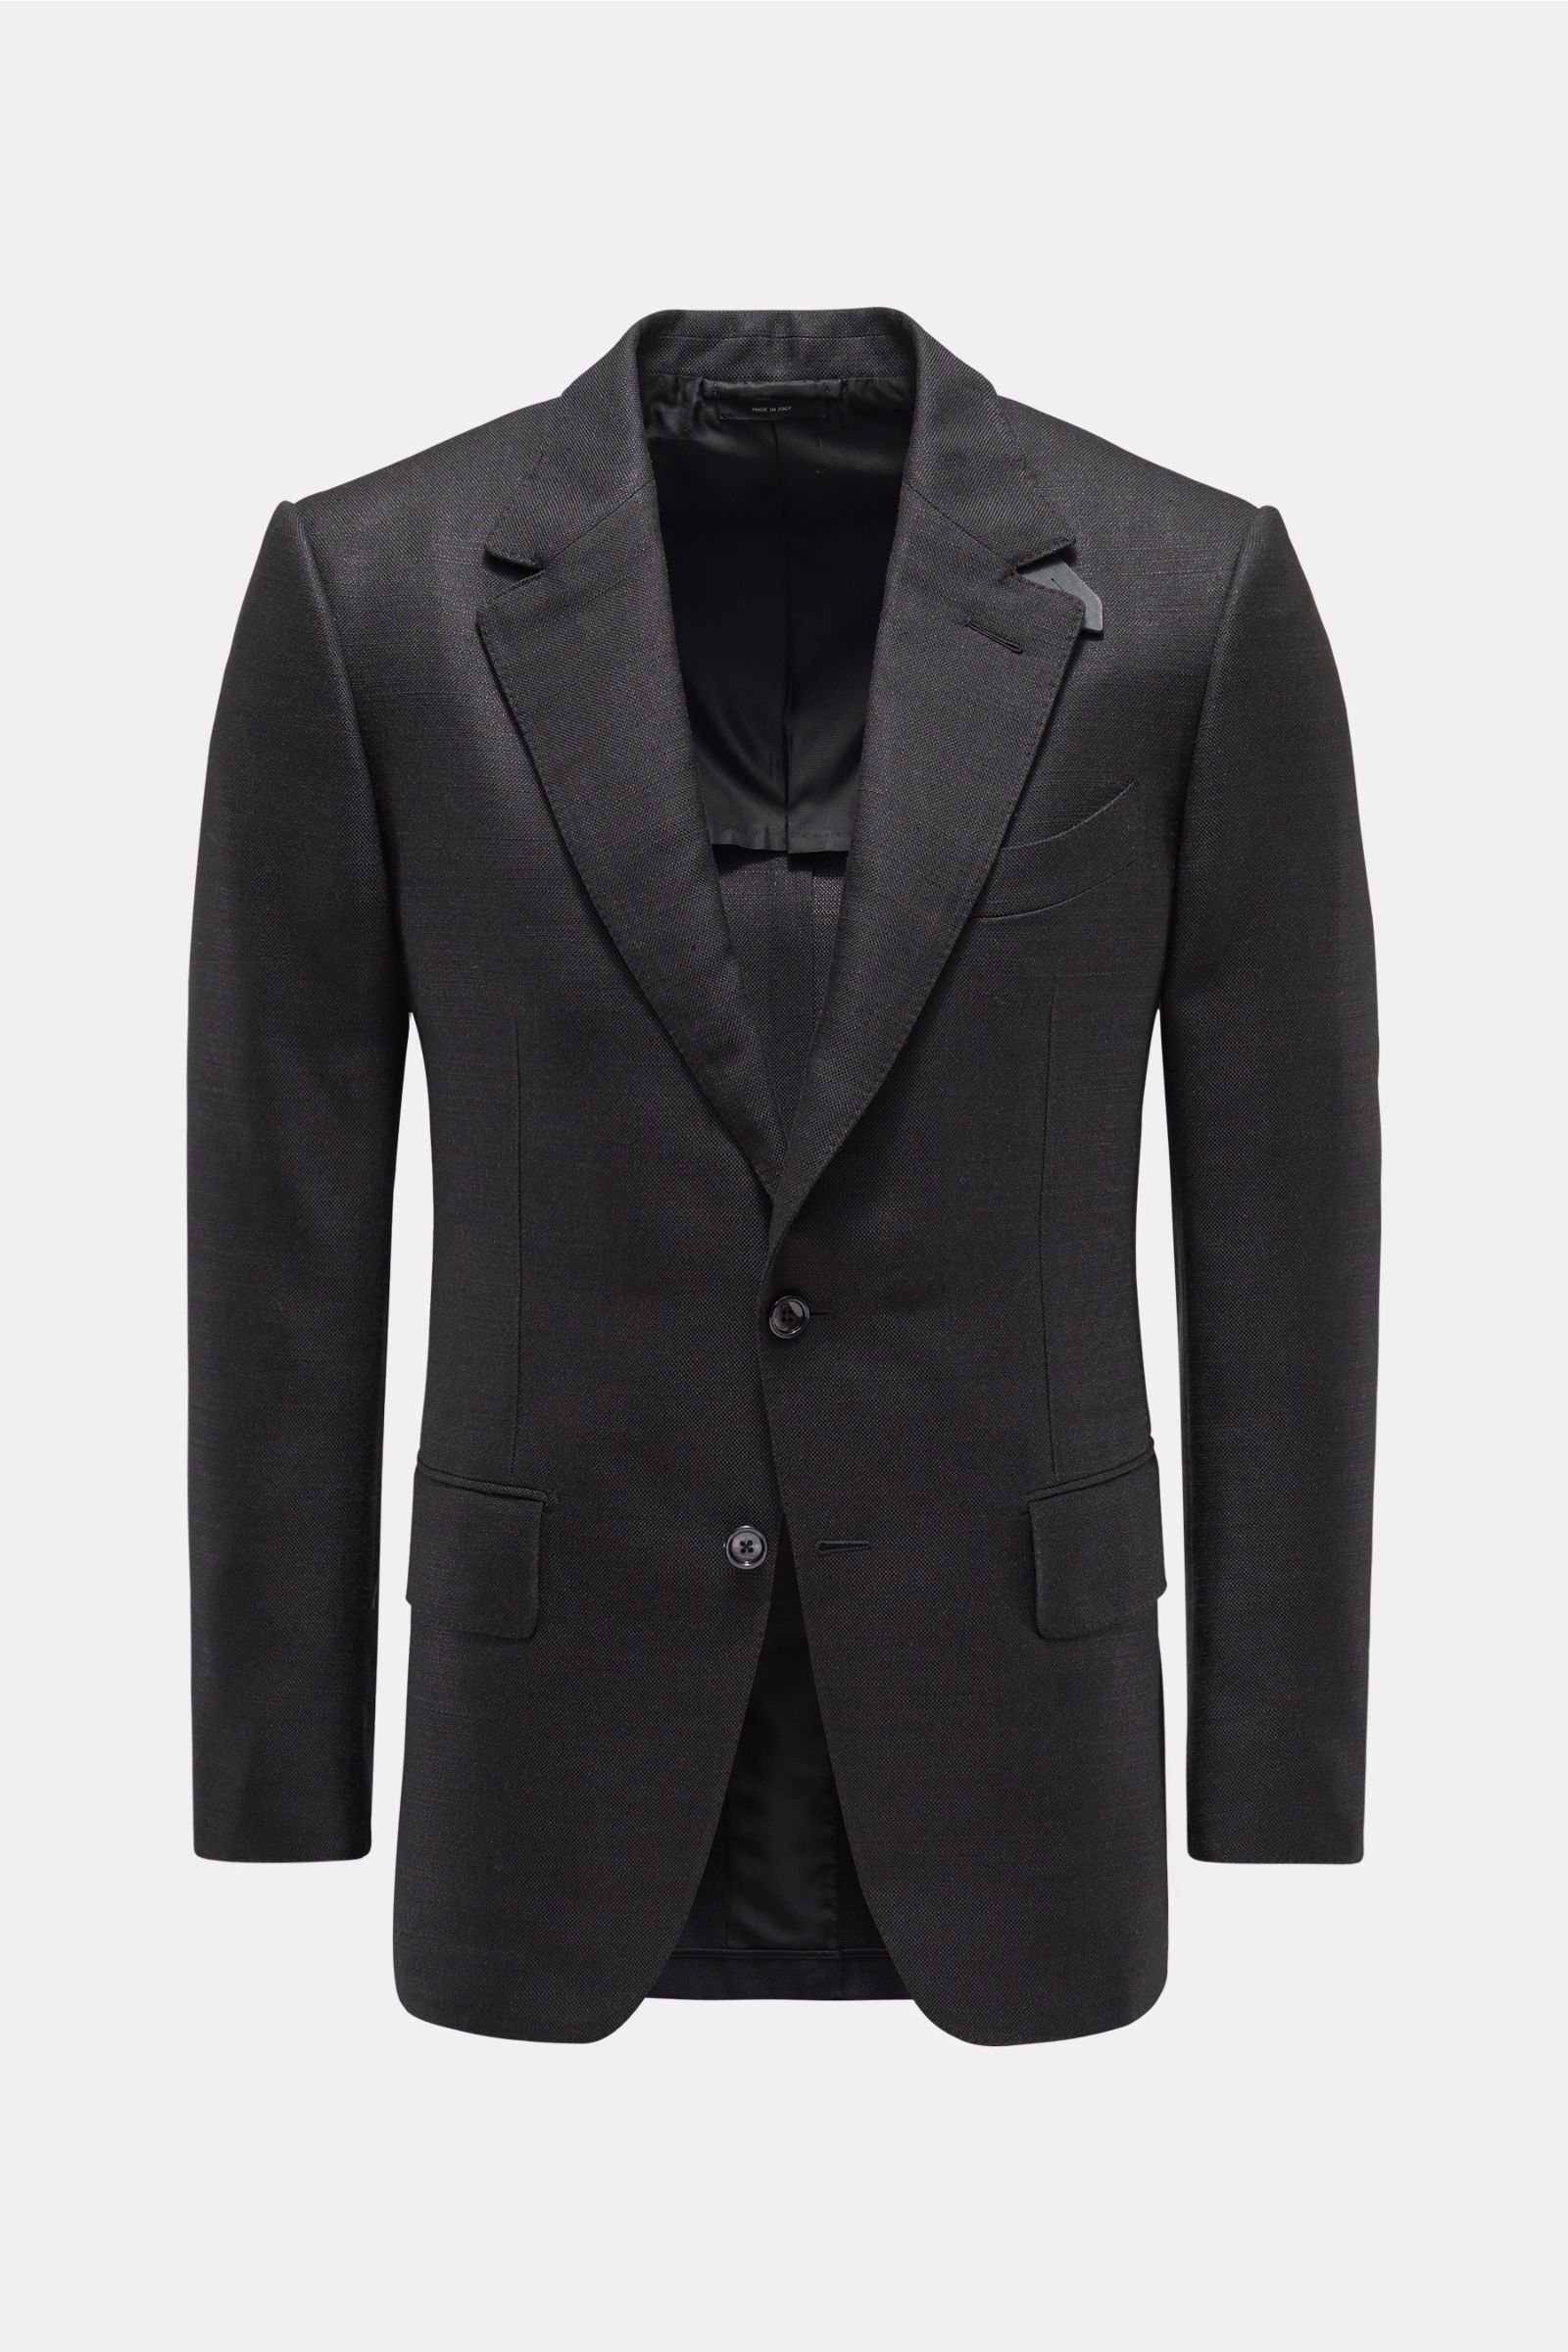 TOM FORD smart-casual jacket 'Atticus' black | BRAUN Hamburg